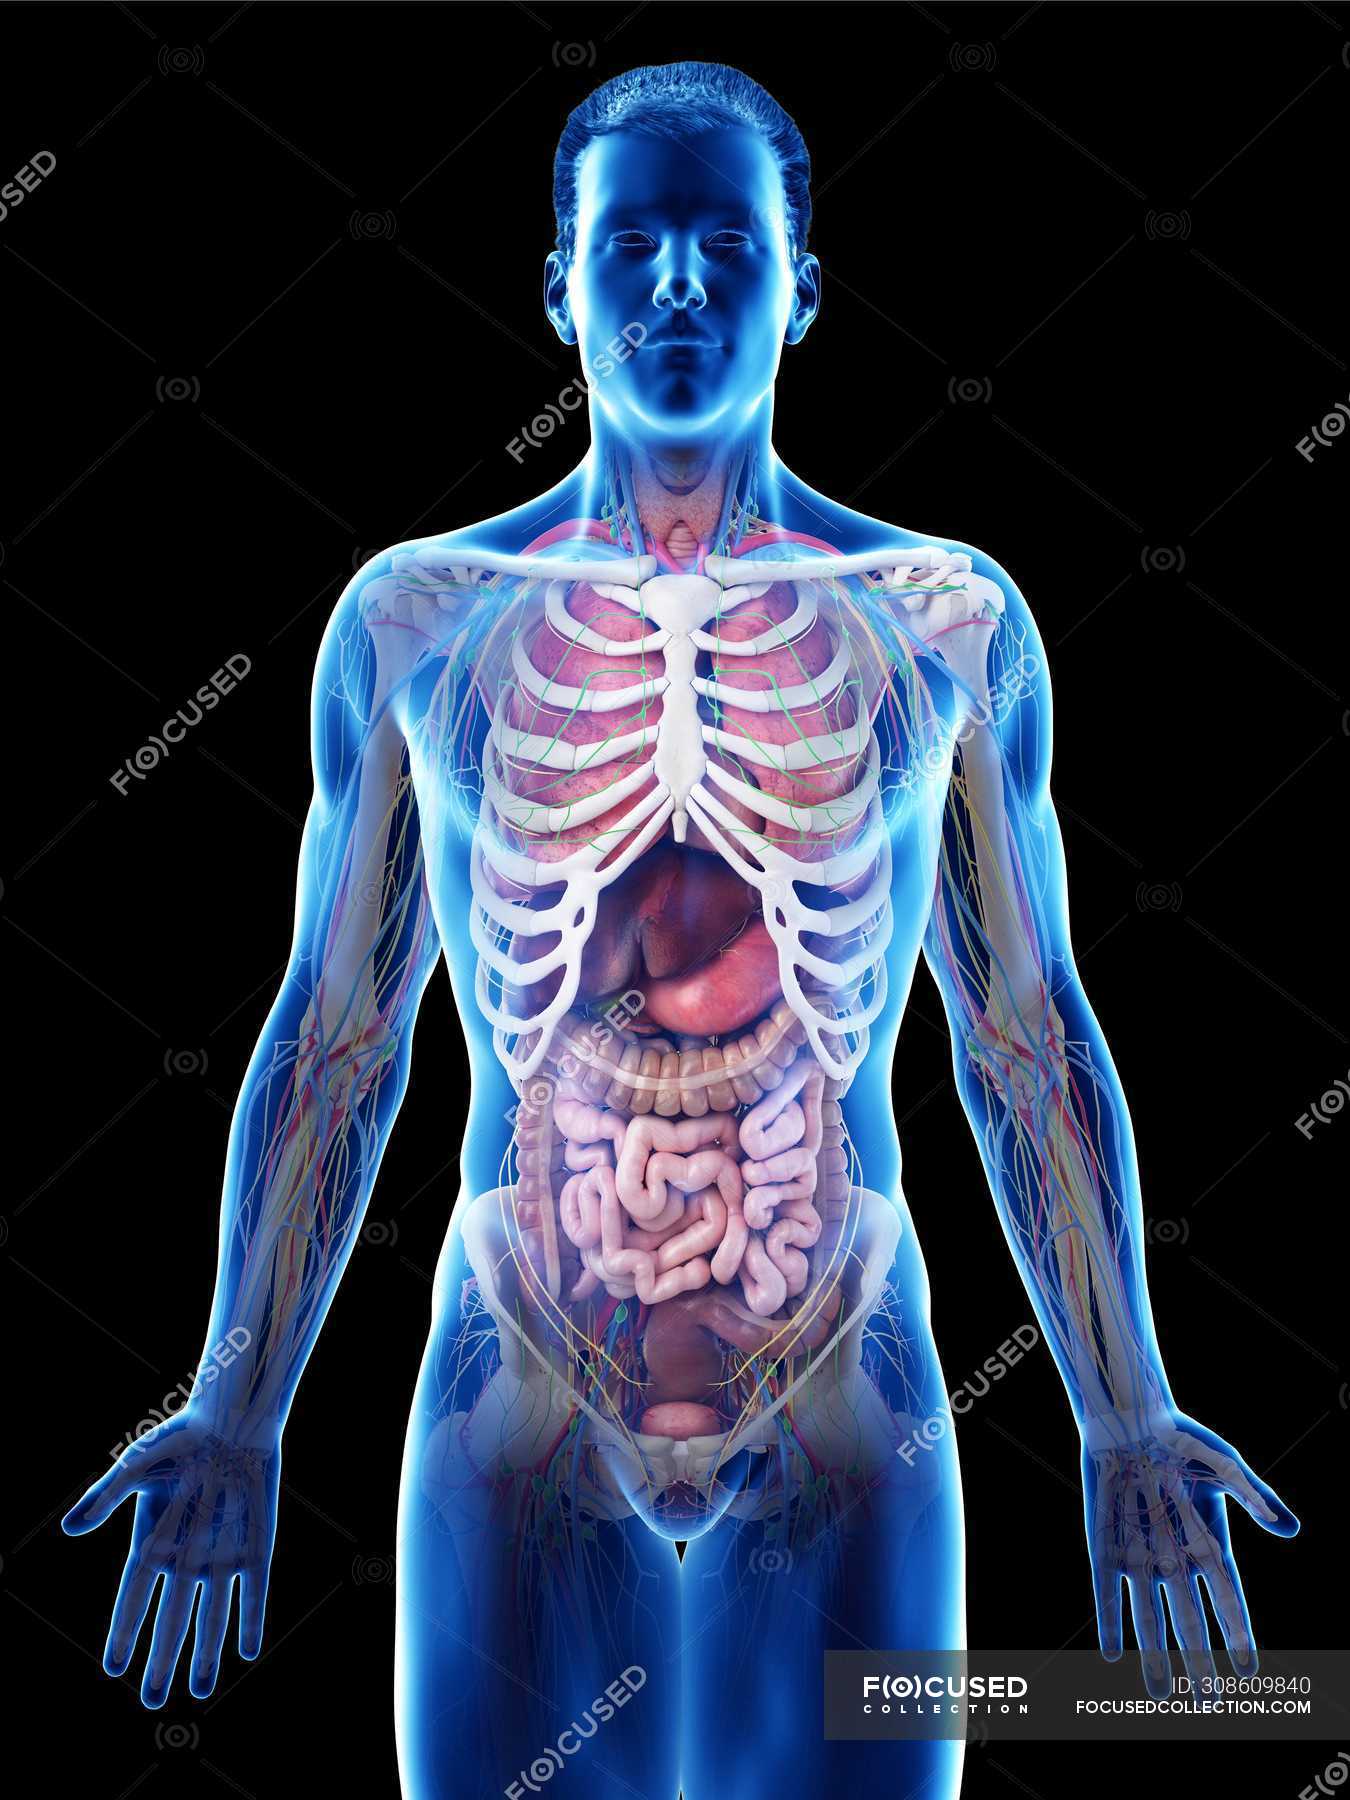 anatomy of human body organs male